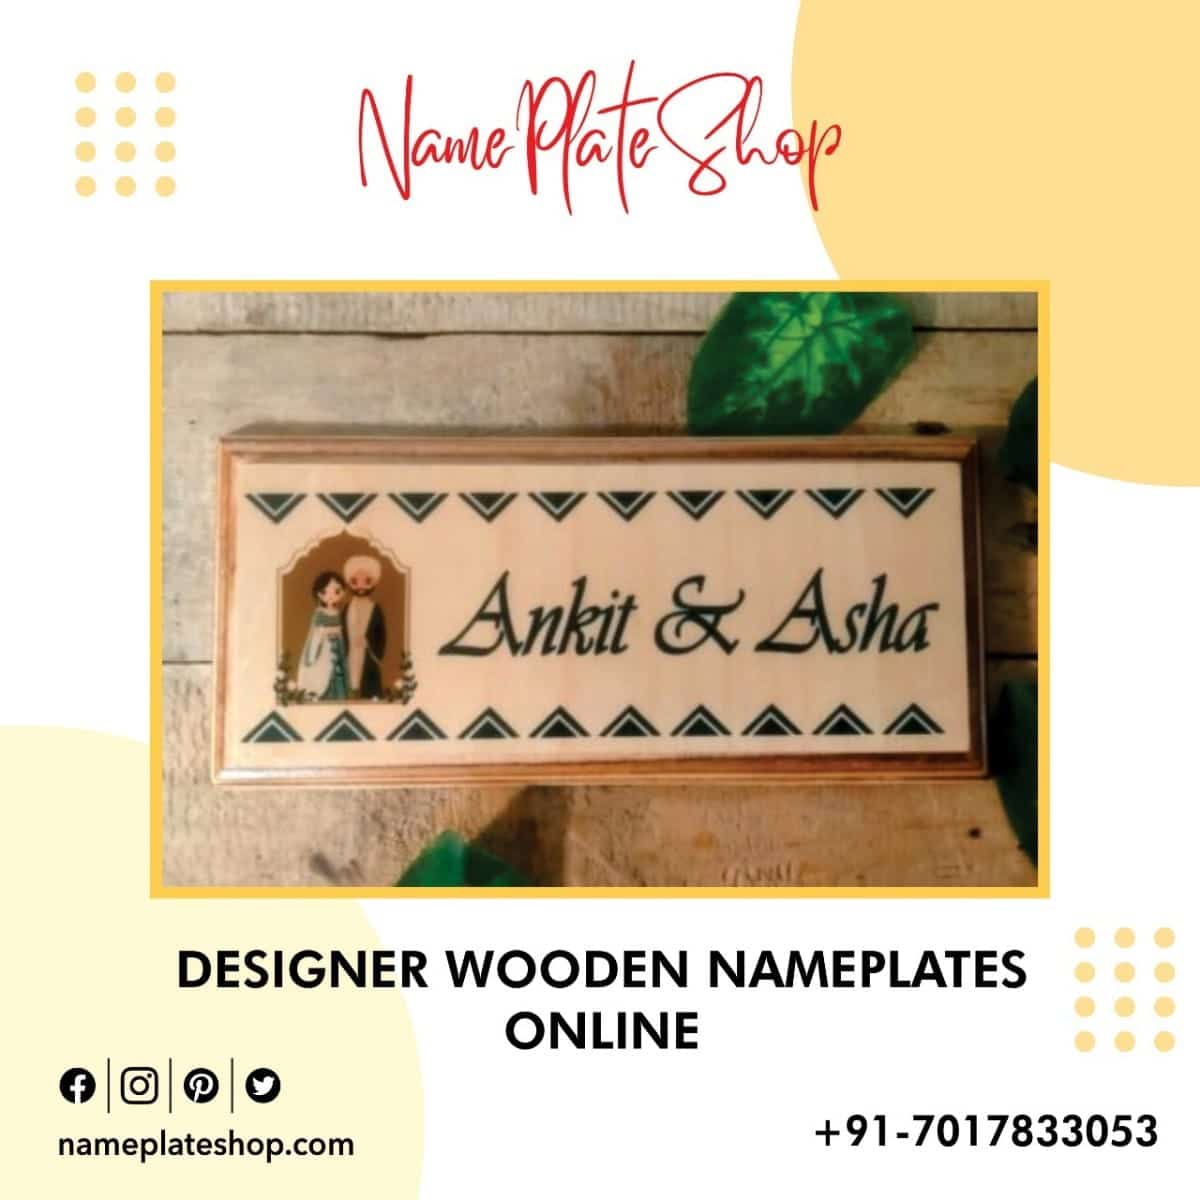 Designer Wooden Nameplates Online